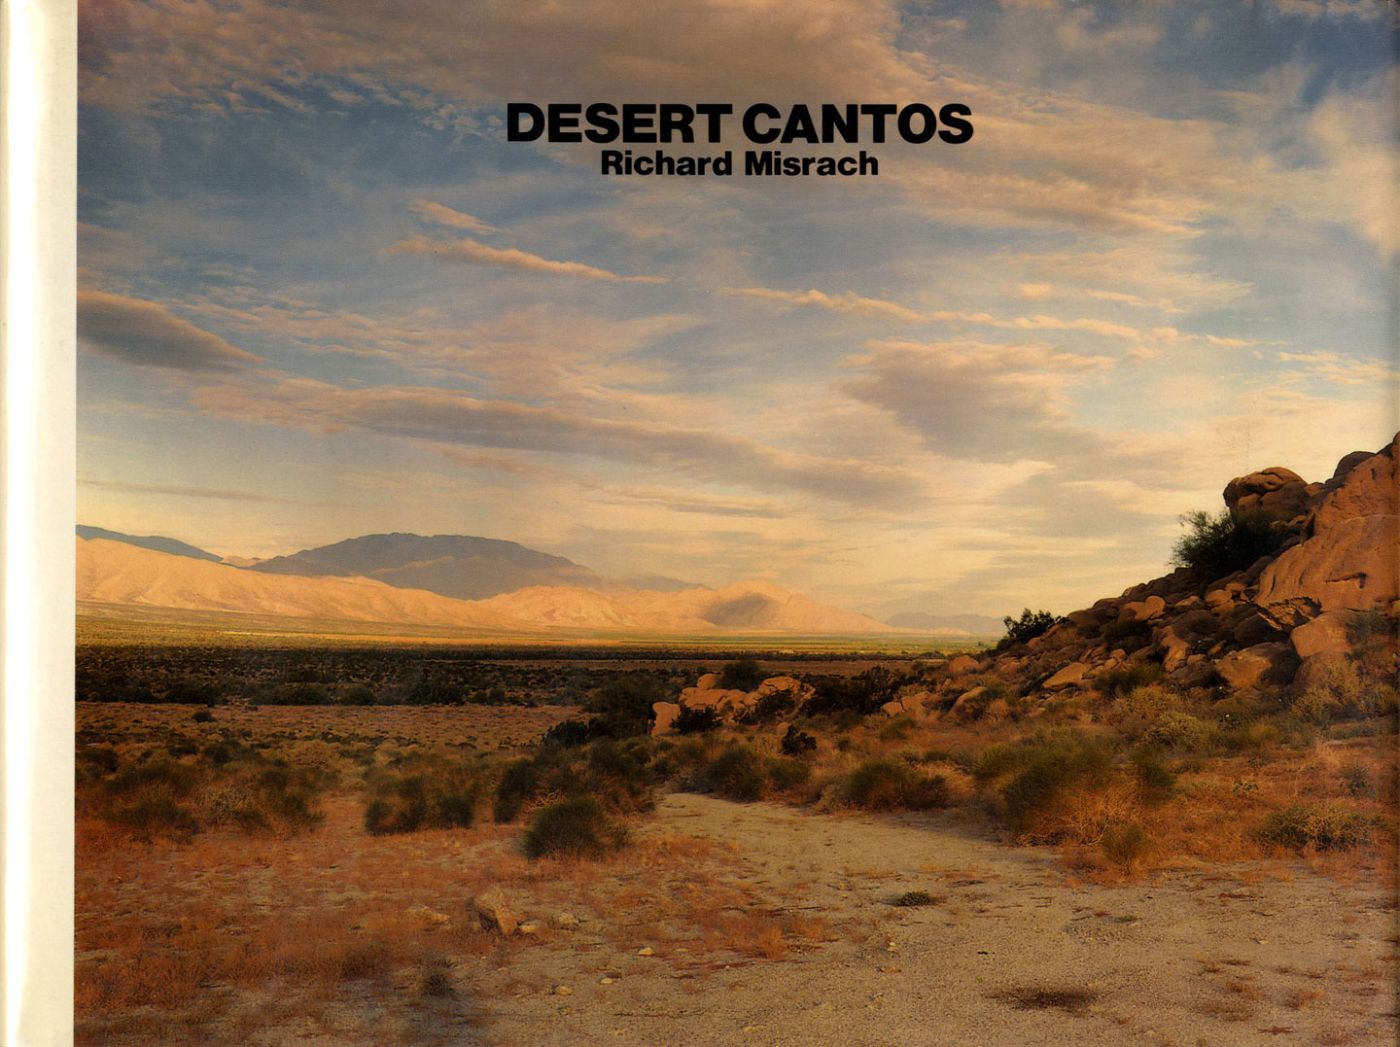 Richard Misrach: Desert Cantos (Japanese Edition) [SIGNED]